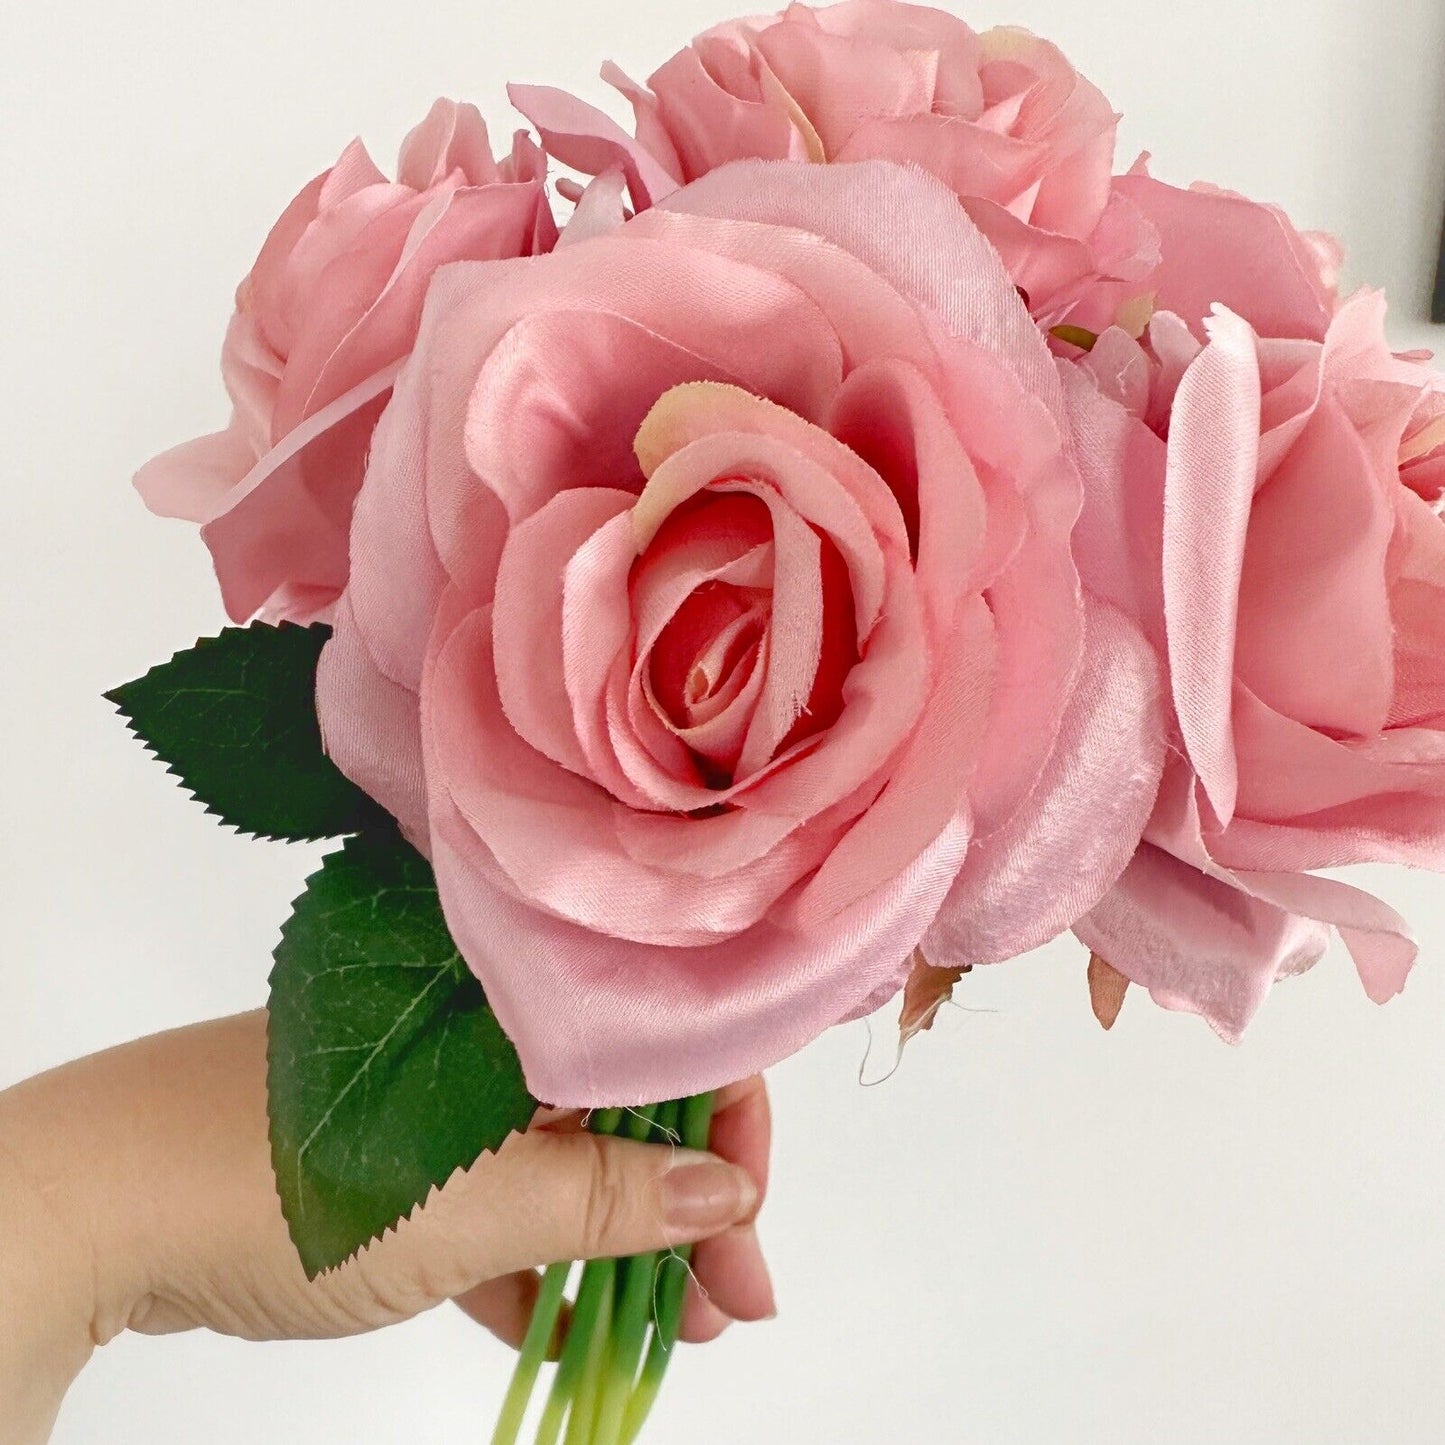 Dusky Pink Roses Artificial Bunch Fake Flowers Wedding Bouquet 7 Stems 25cm Open